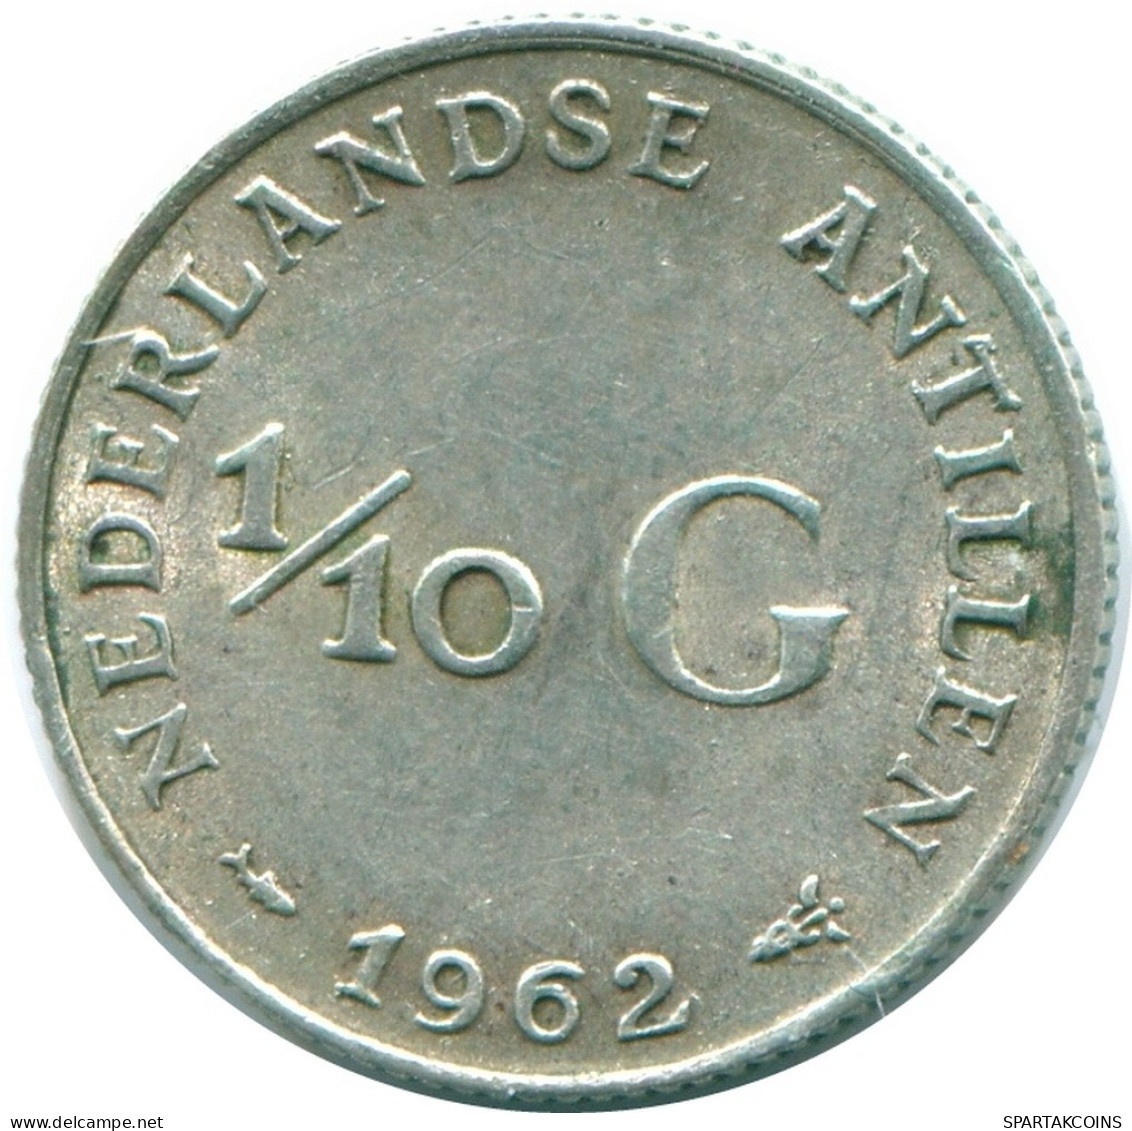 1/10 GULDEN 1962 NETHERLANDS ANTILLES SILVER Colonial Coin #NL12367.3.U.A - Antilles Néerlandaises